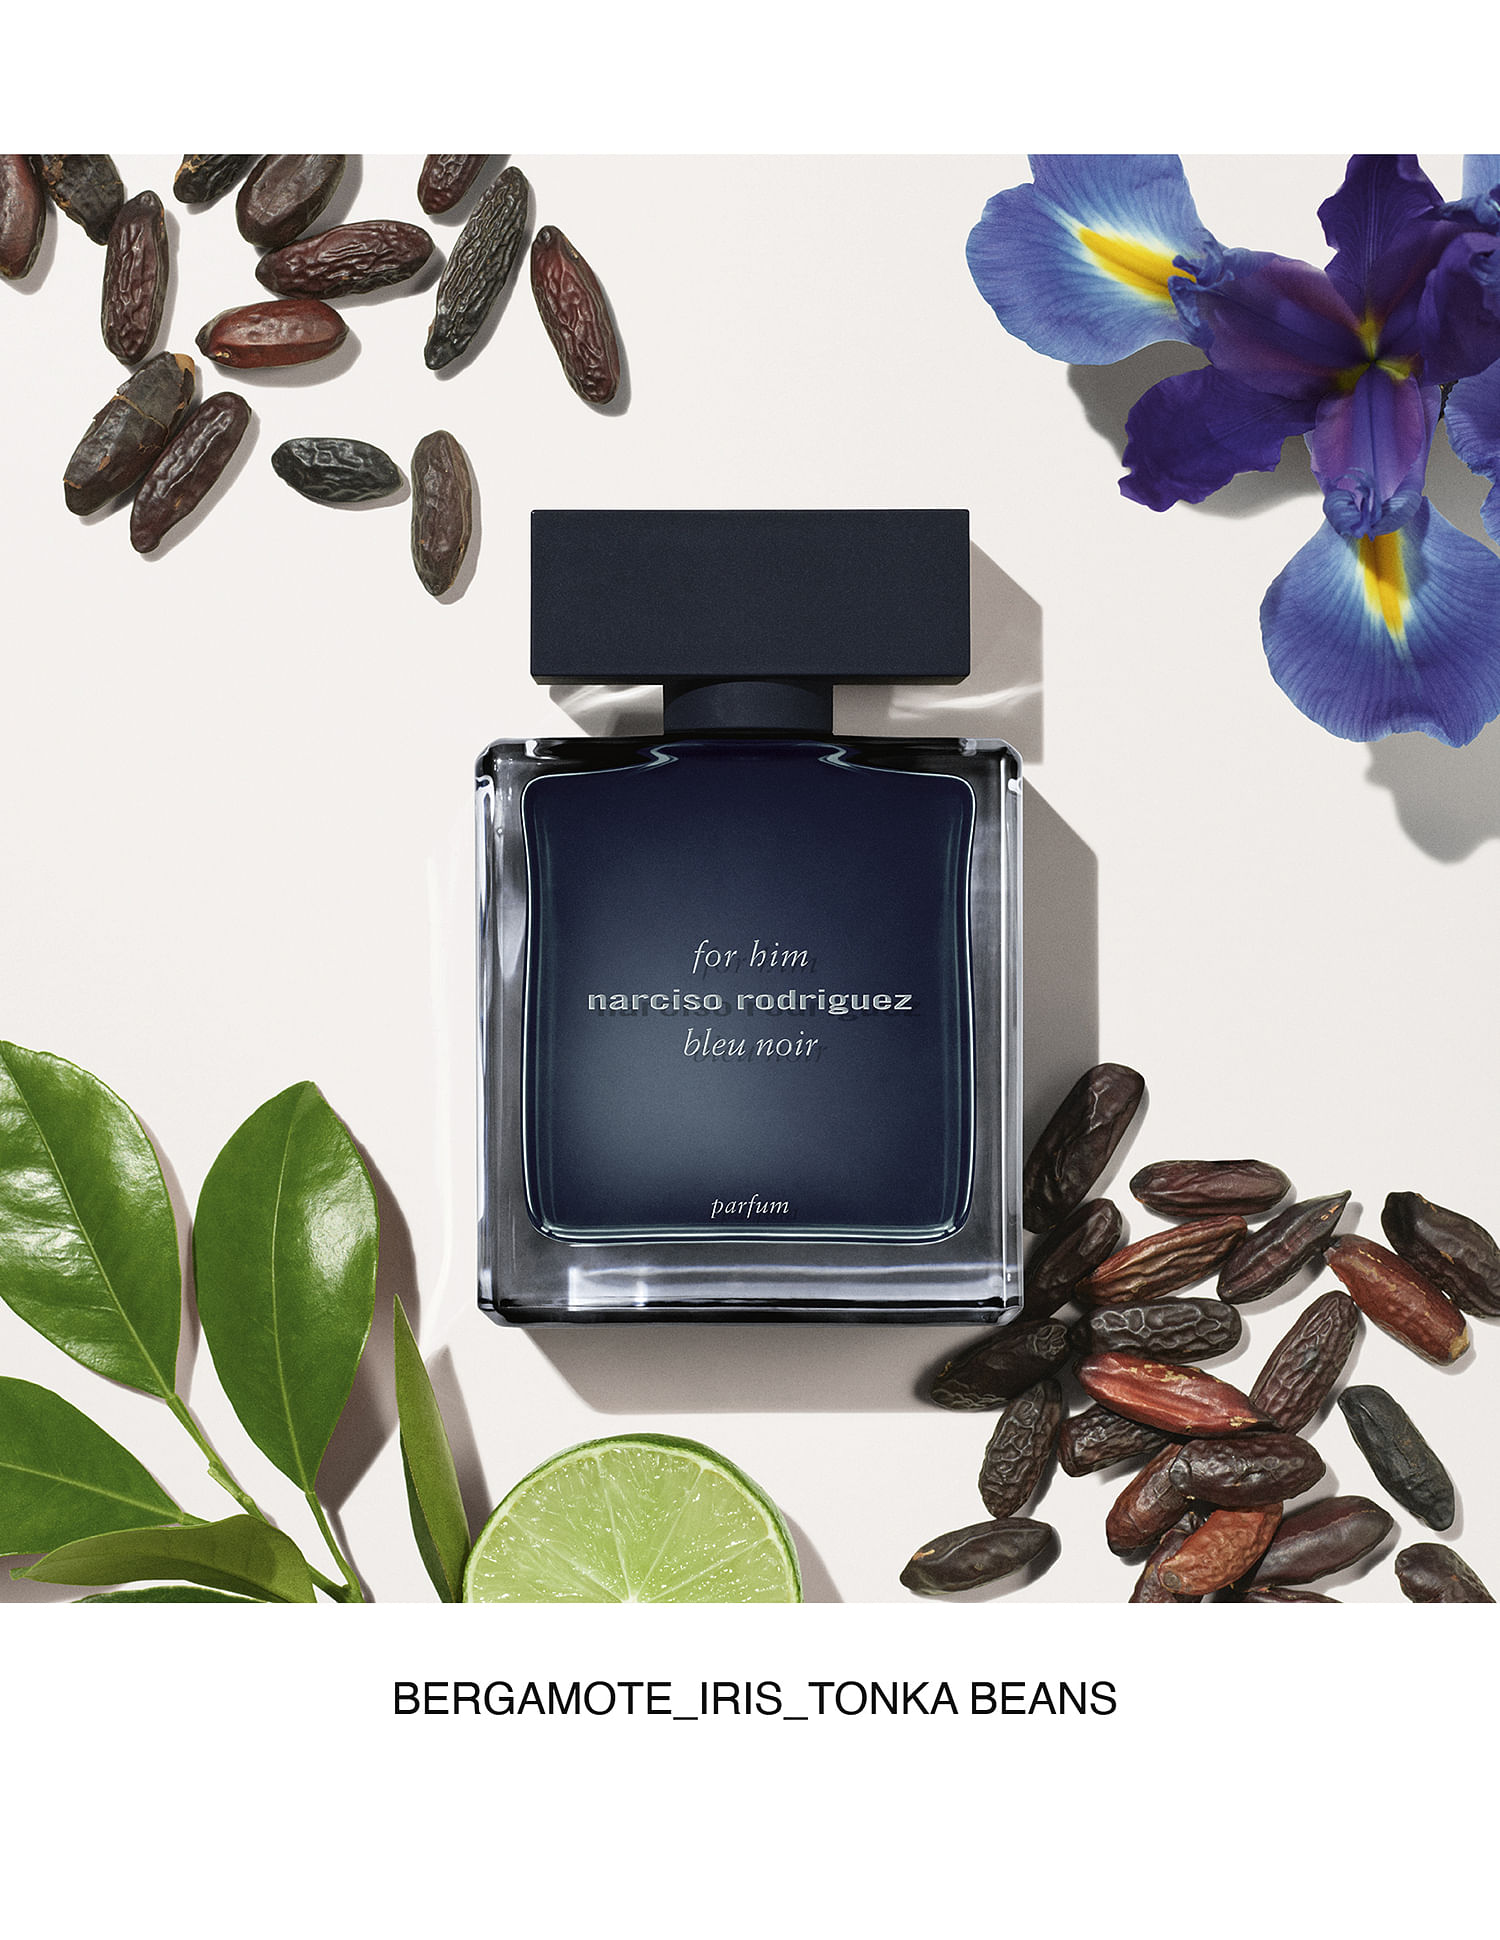 Narciso Rodriguez For Him Bleu Noir Parfum 100 ML